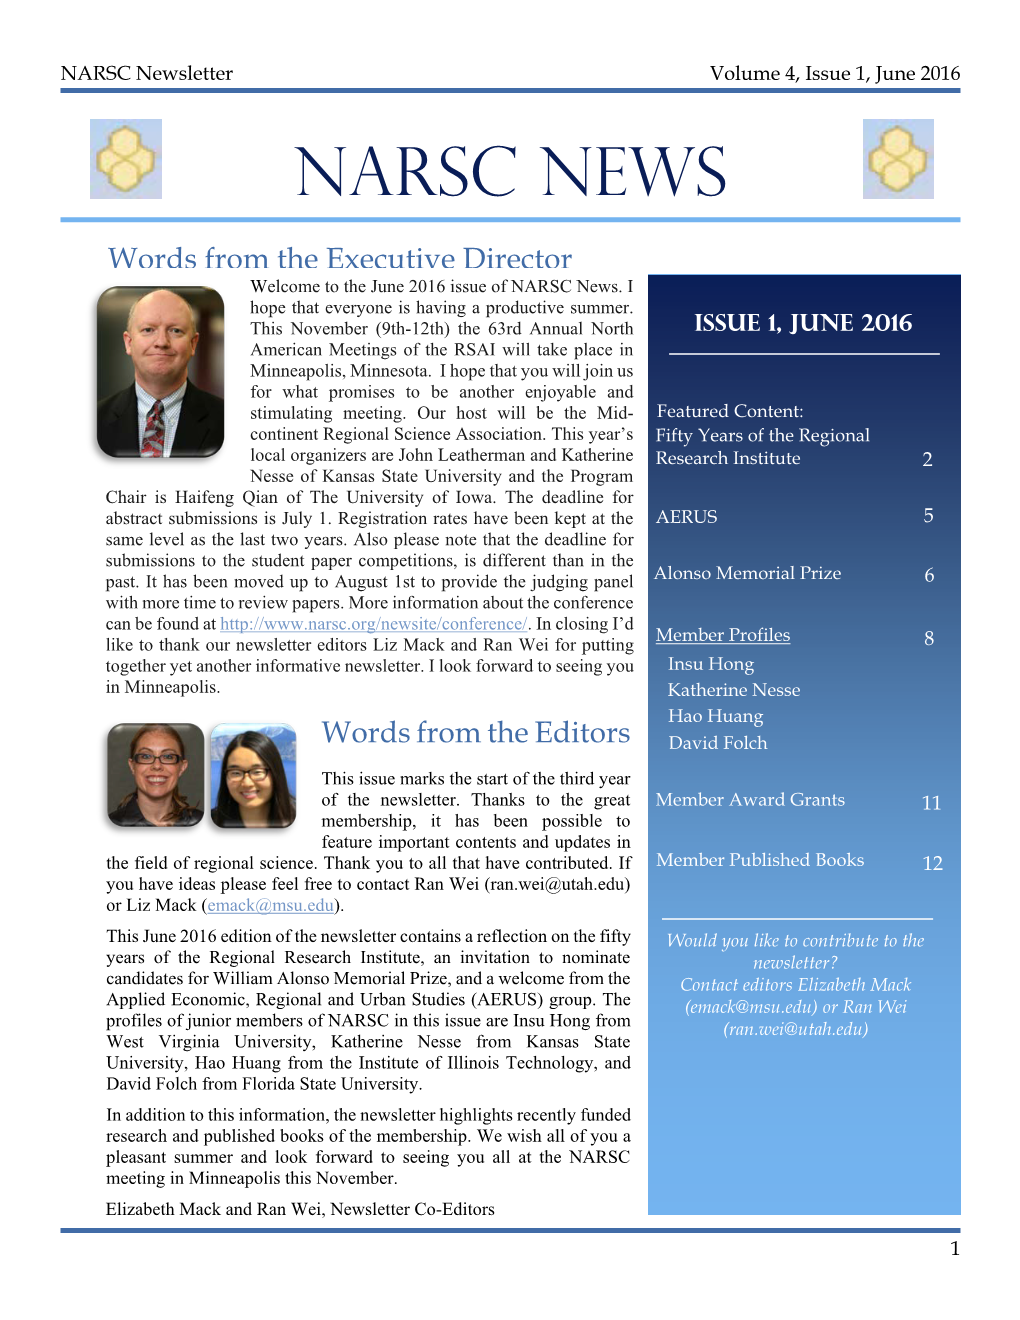 NARSC News June 2016